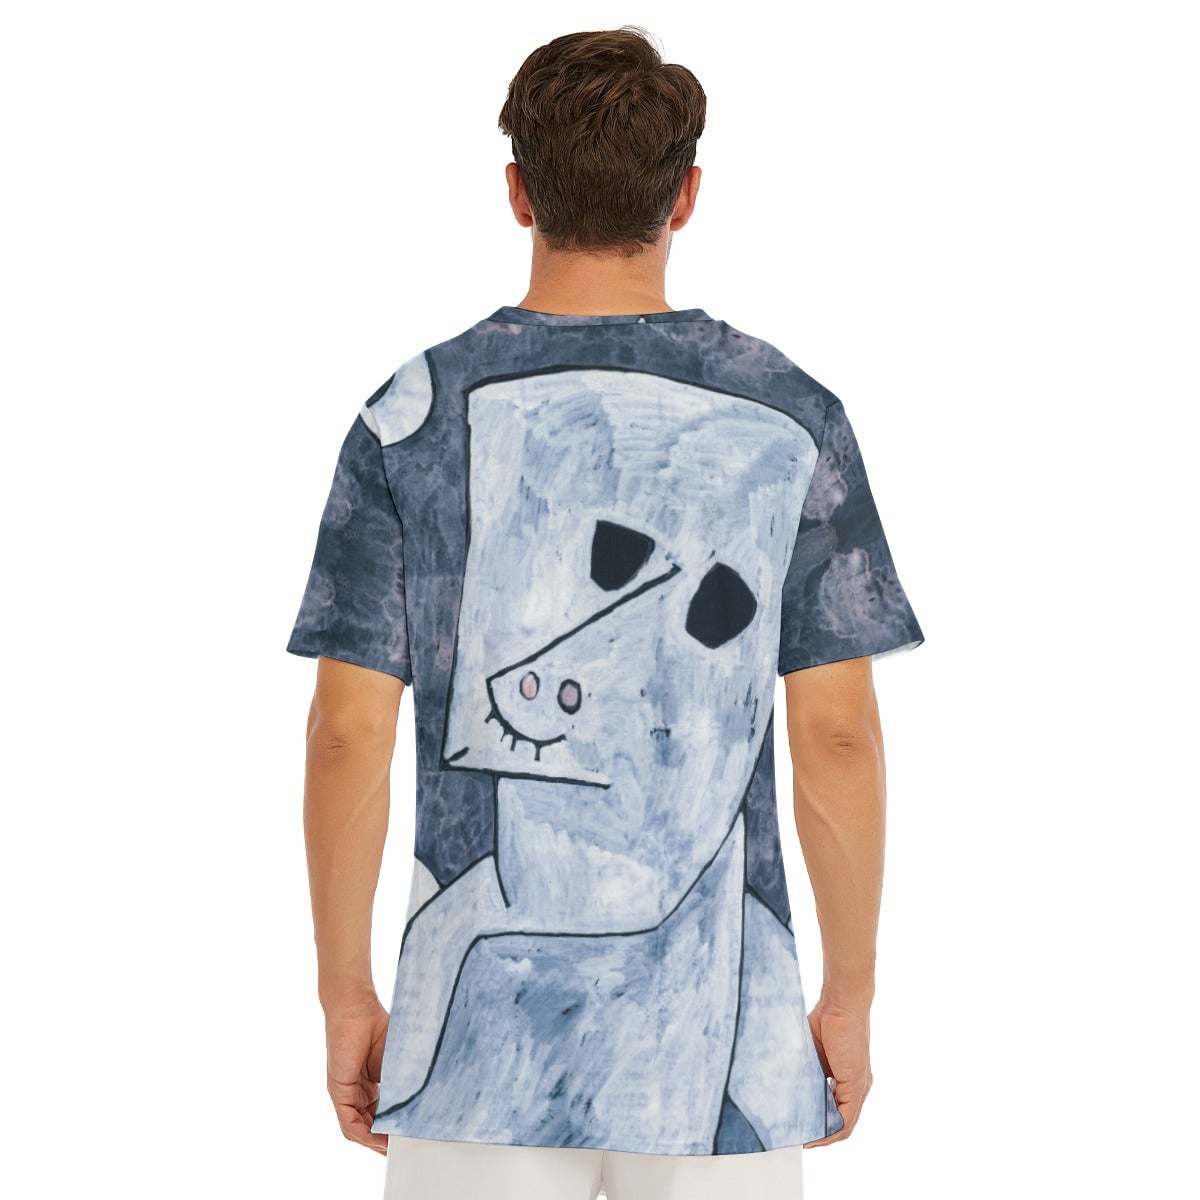 Angel Applicant Paul Klee T-Shirt - Iconic Artwork Tee